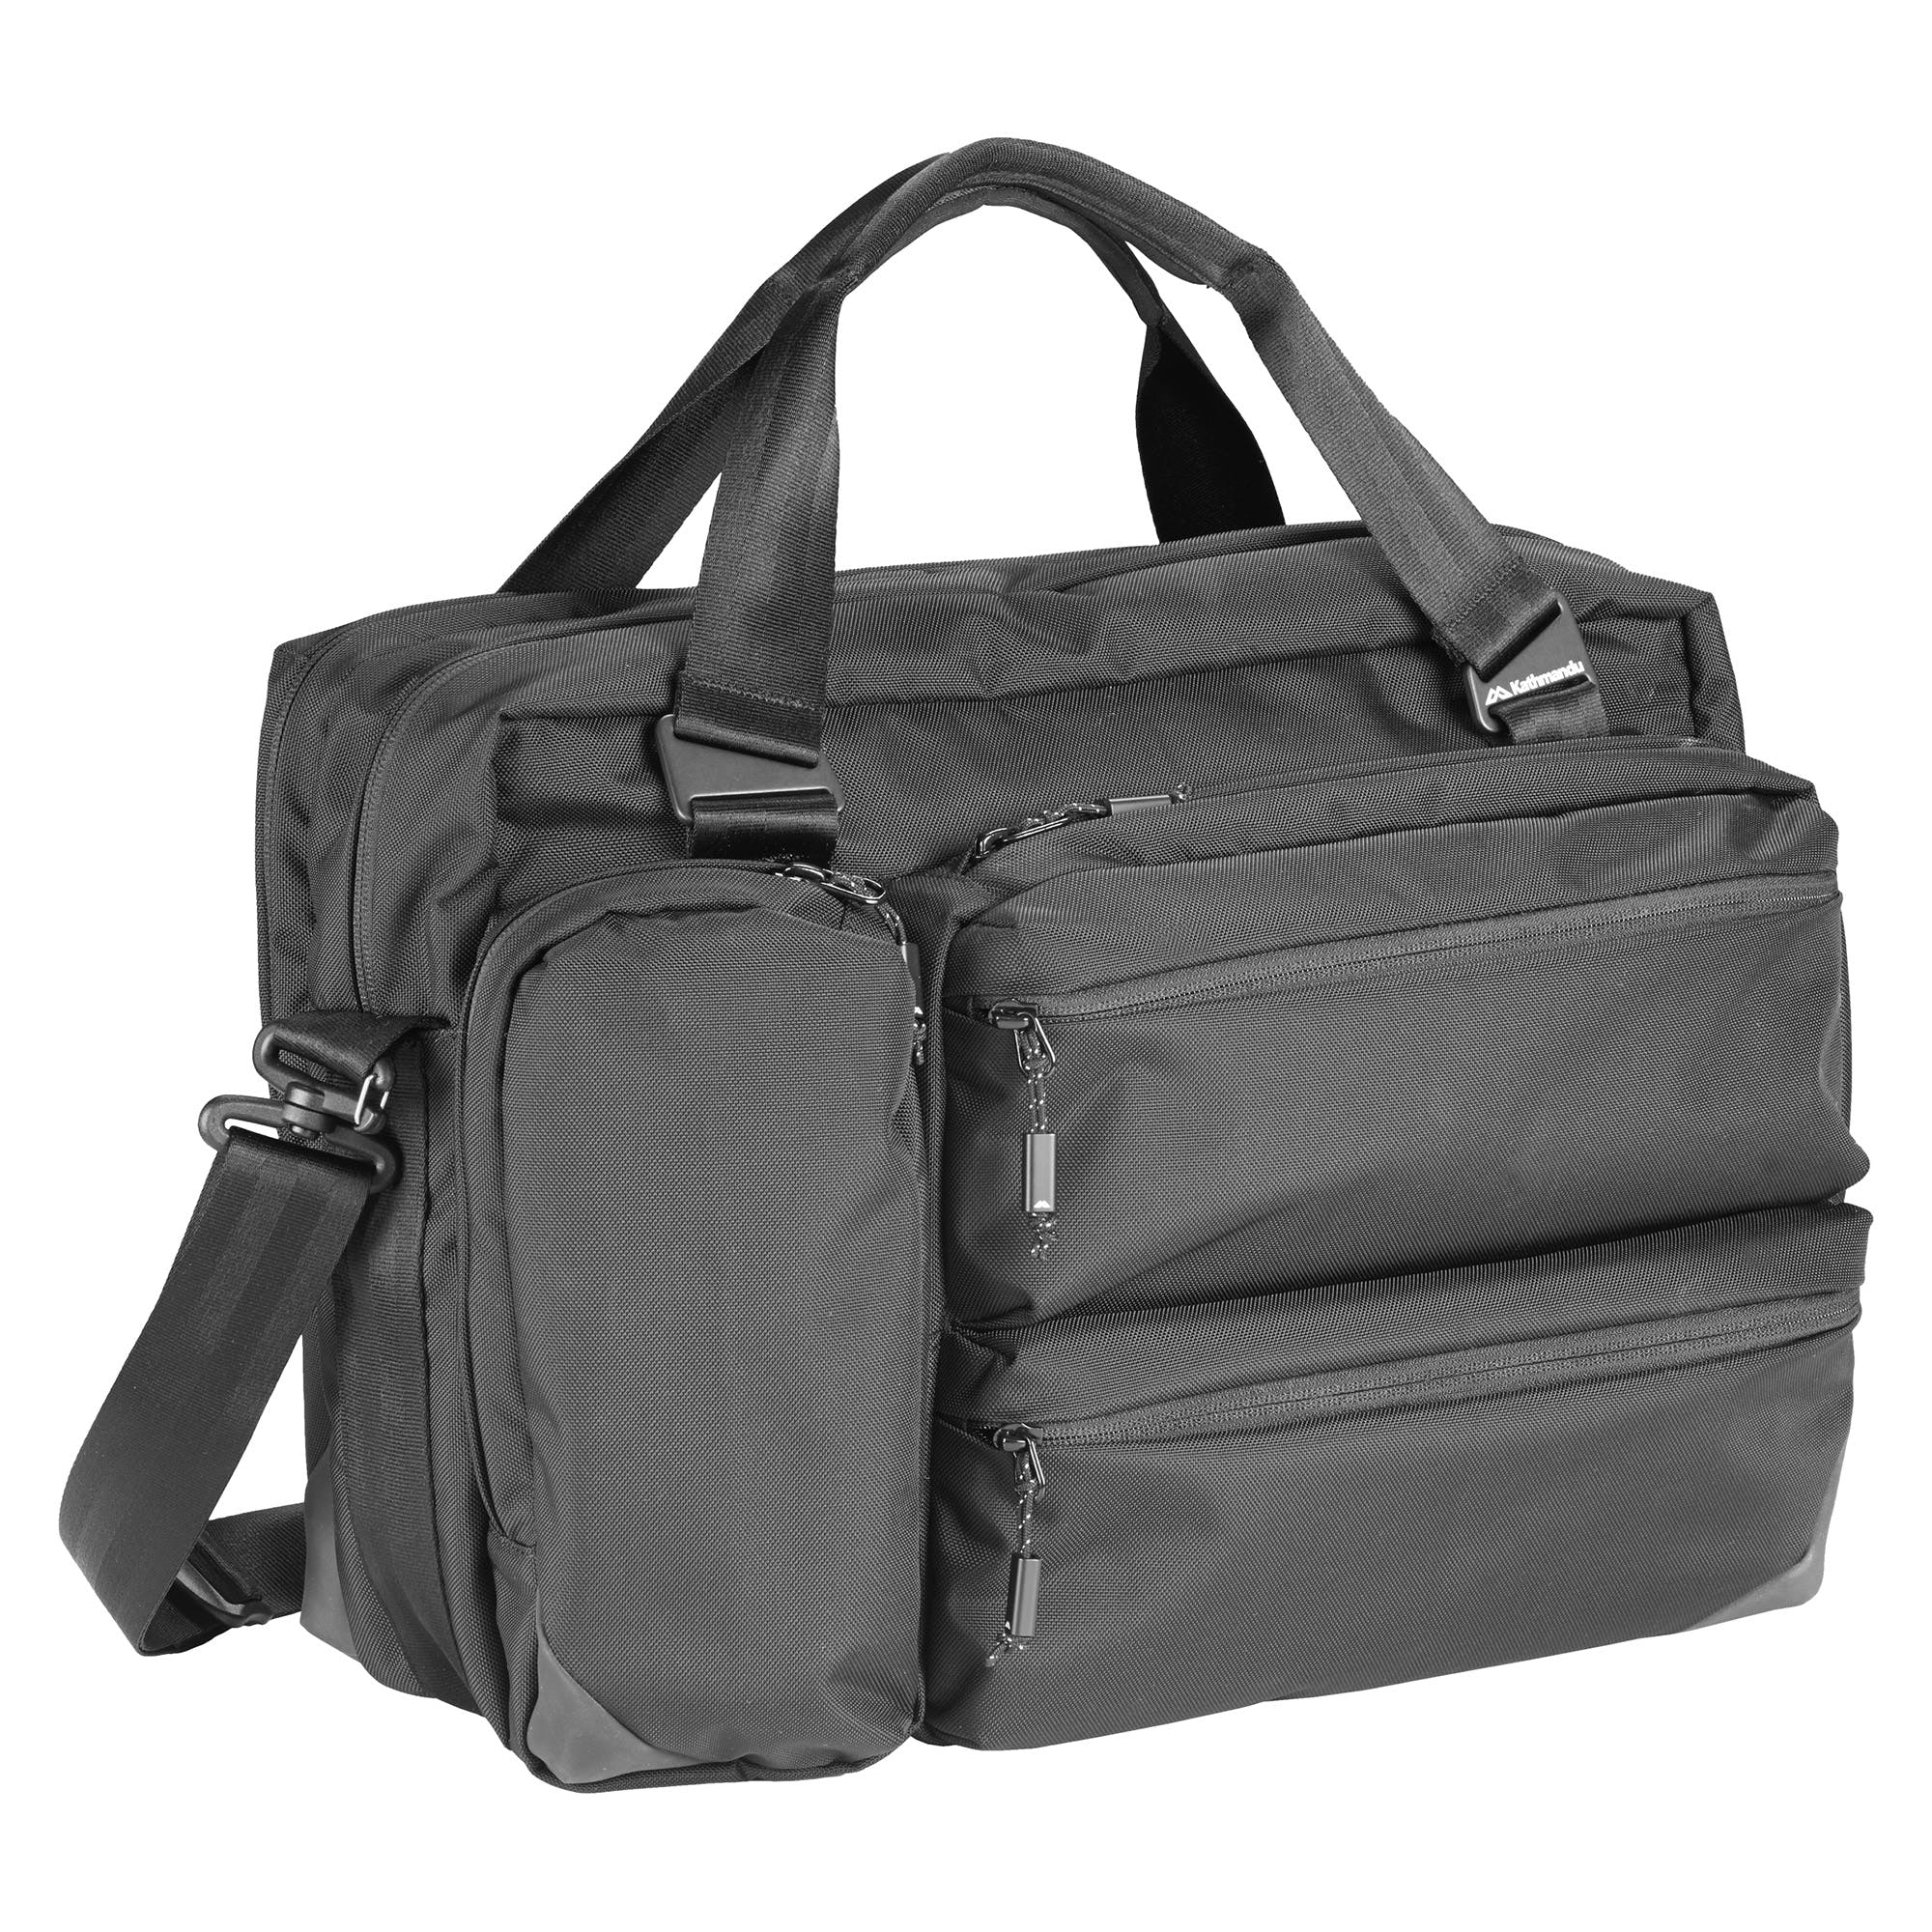 Jet Brief 22L Carry On Luggage Laptop Bag - Black